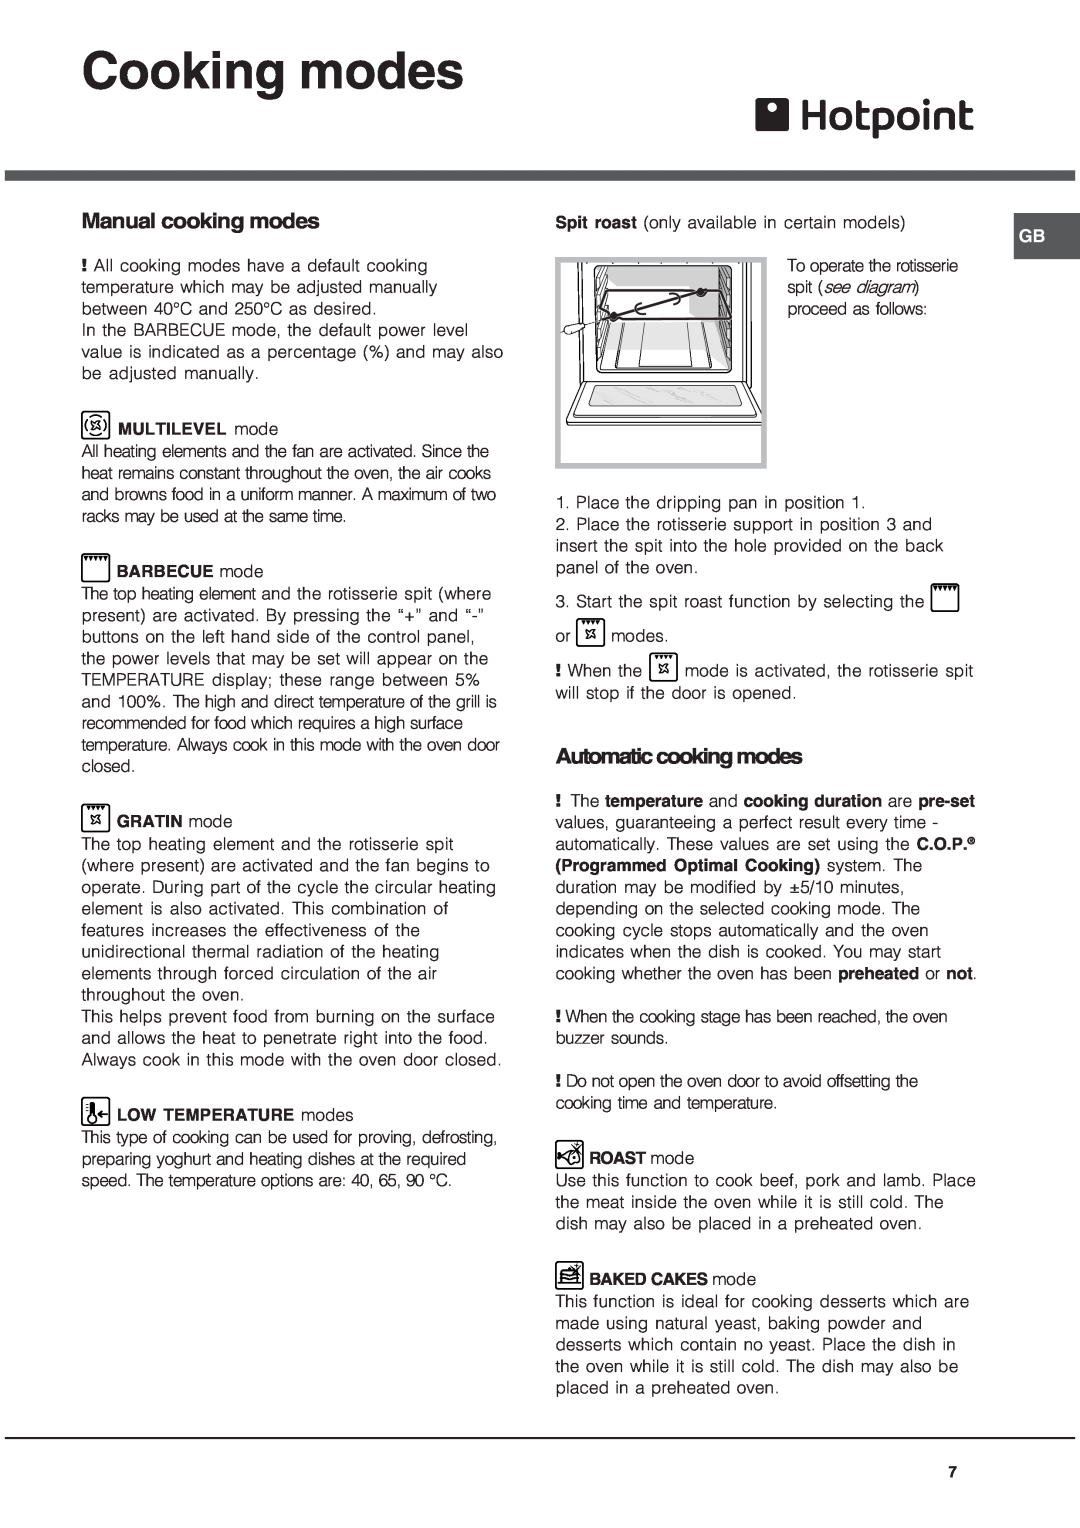 Hotpoint SE101PGX manual Cooking modes, Manual cooking modes, Automatic cooking modes 